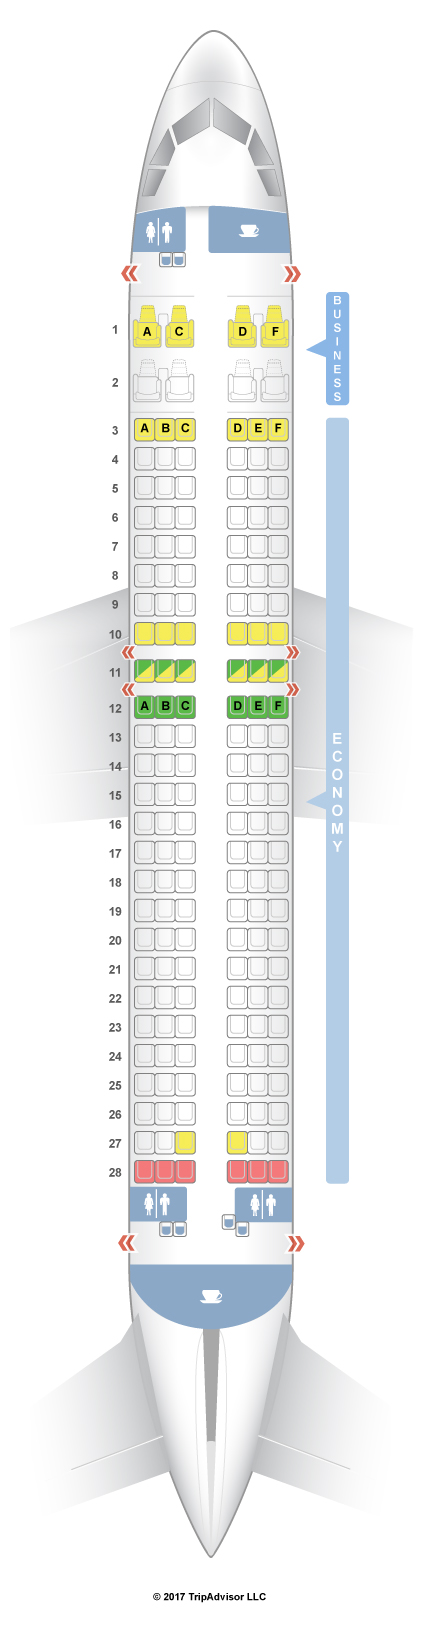 Airbus A320 Seating Chart Lufthansa